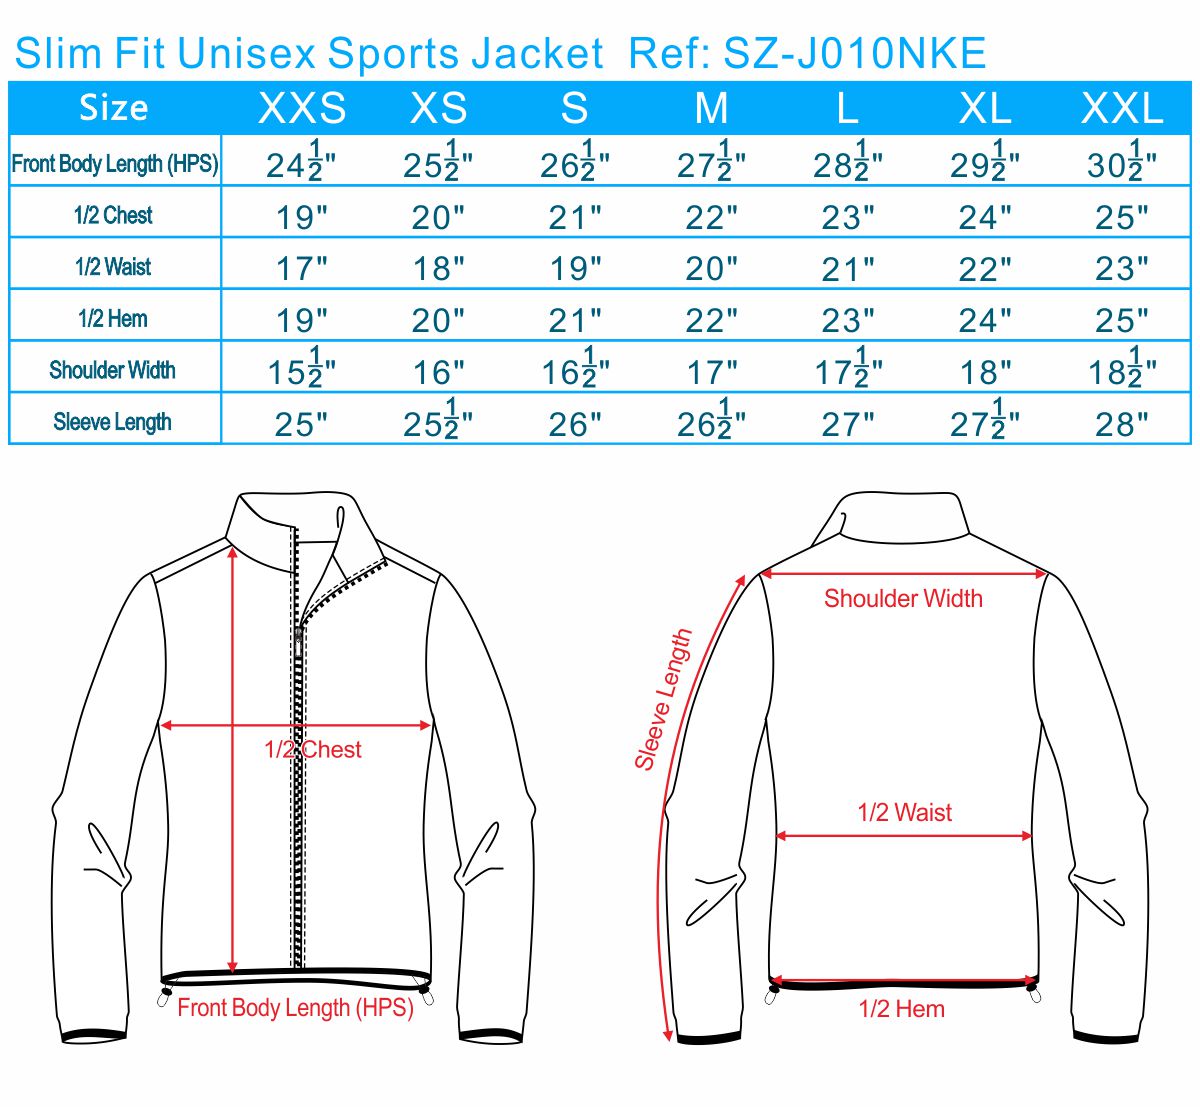 Slim Fit Unisex Sports Jacket